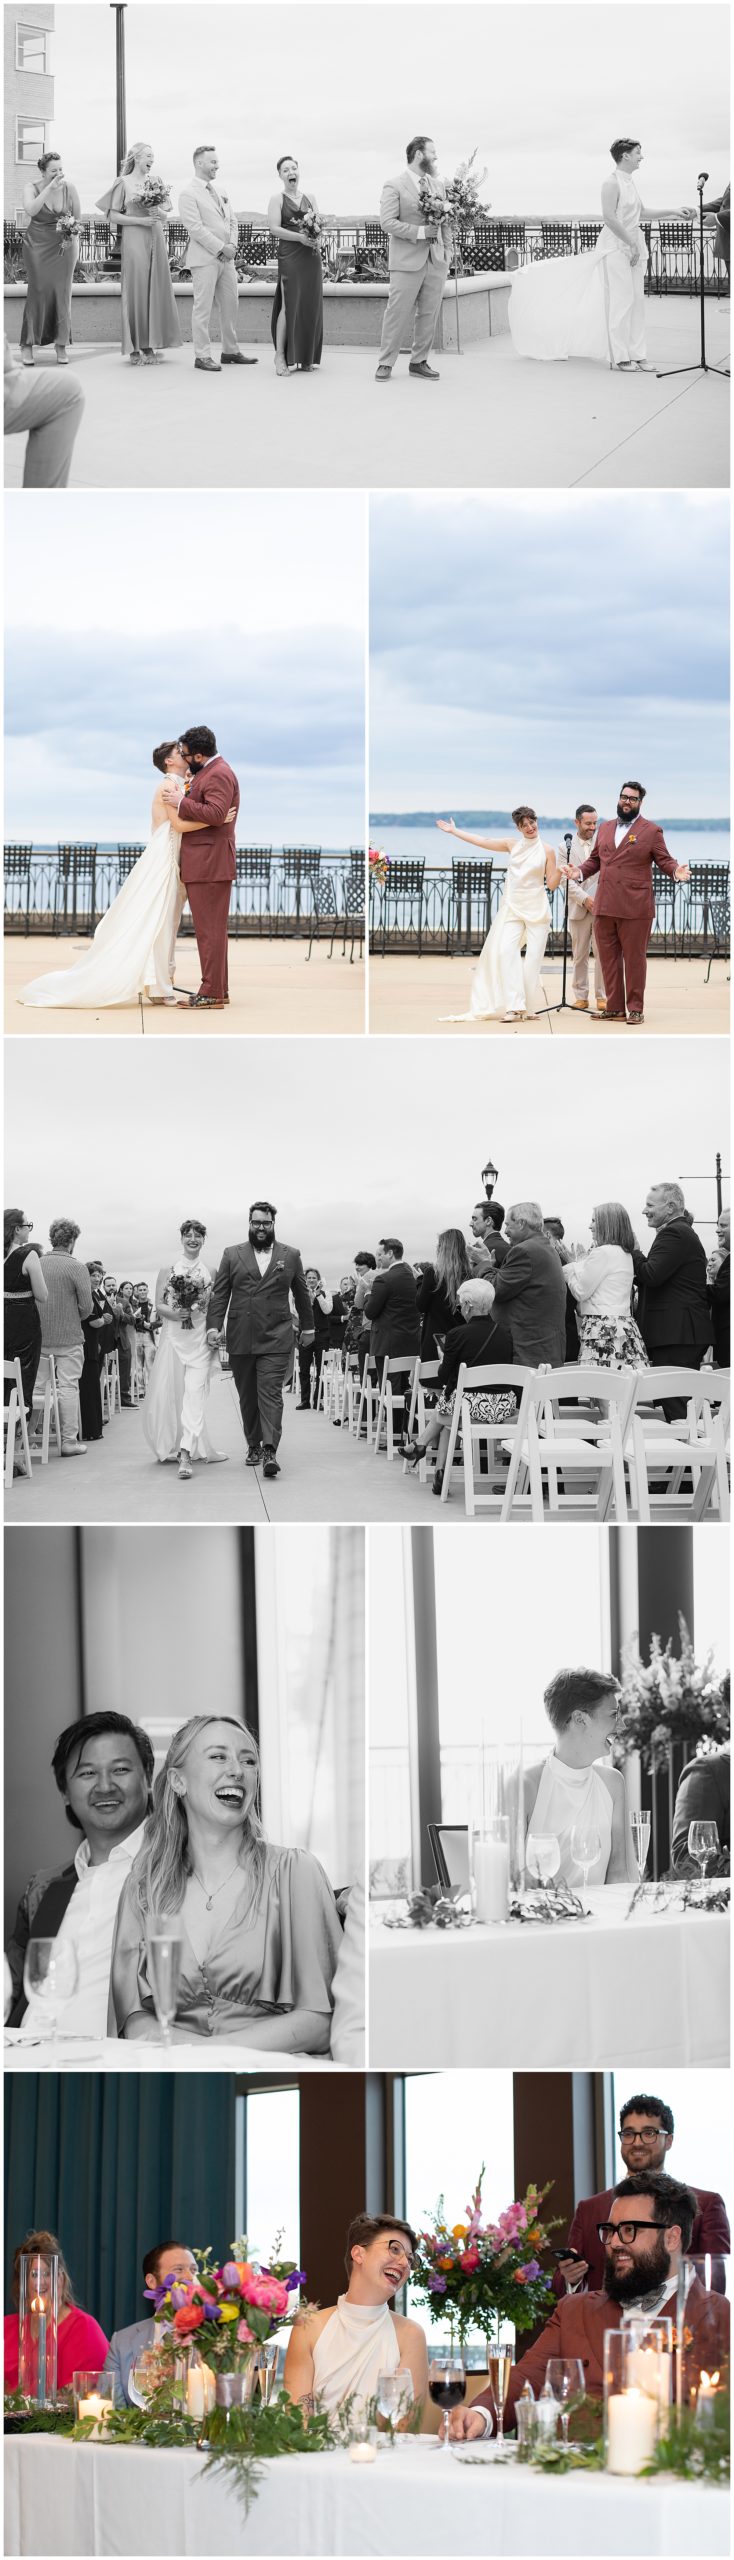 Couple's wedding portraits at Madison Edgewater Hotel | Kuffel Photography